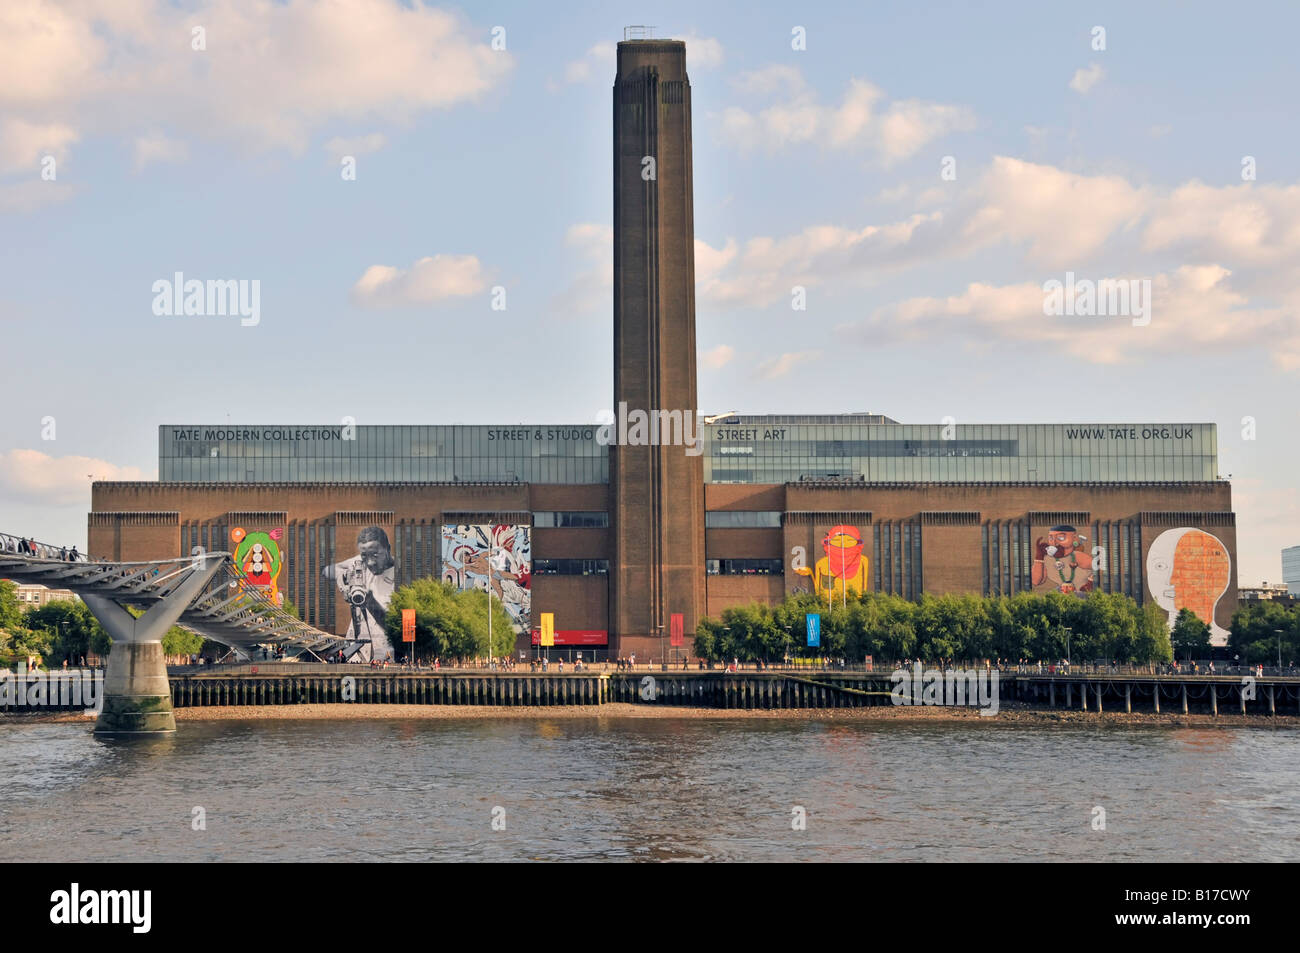 View across River Thames with Millennium Bridge & Tate Modern street art display on walls of refurbished redundant Bankside power station England UK Stock Photo